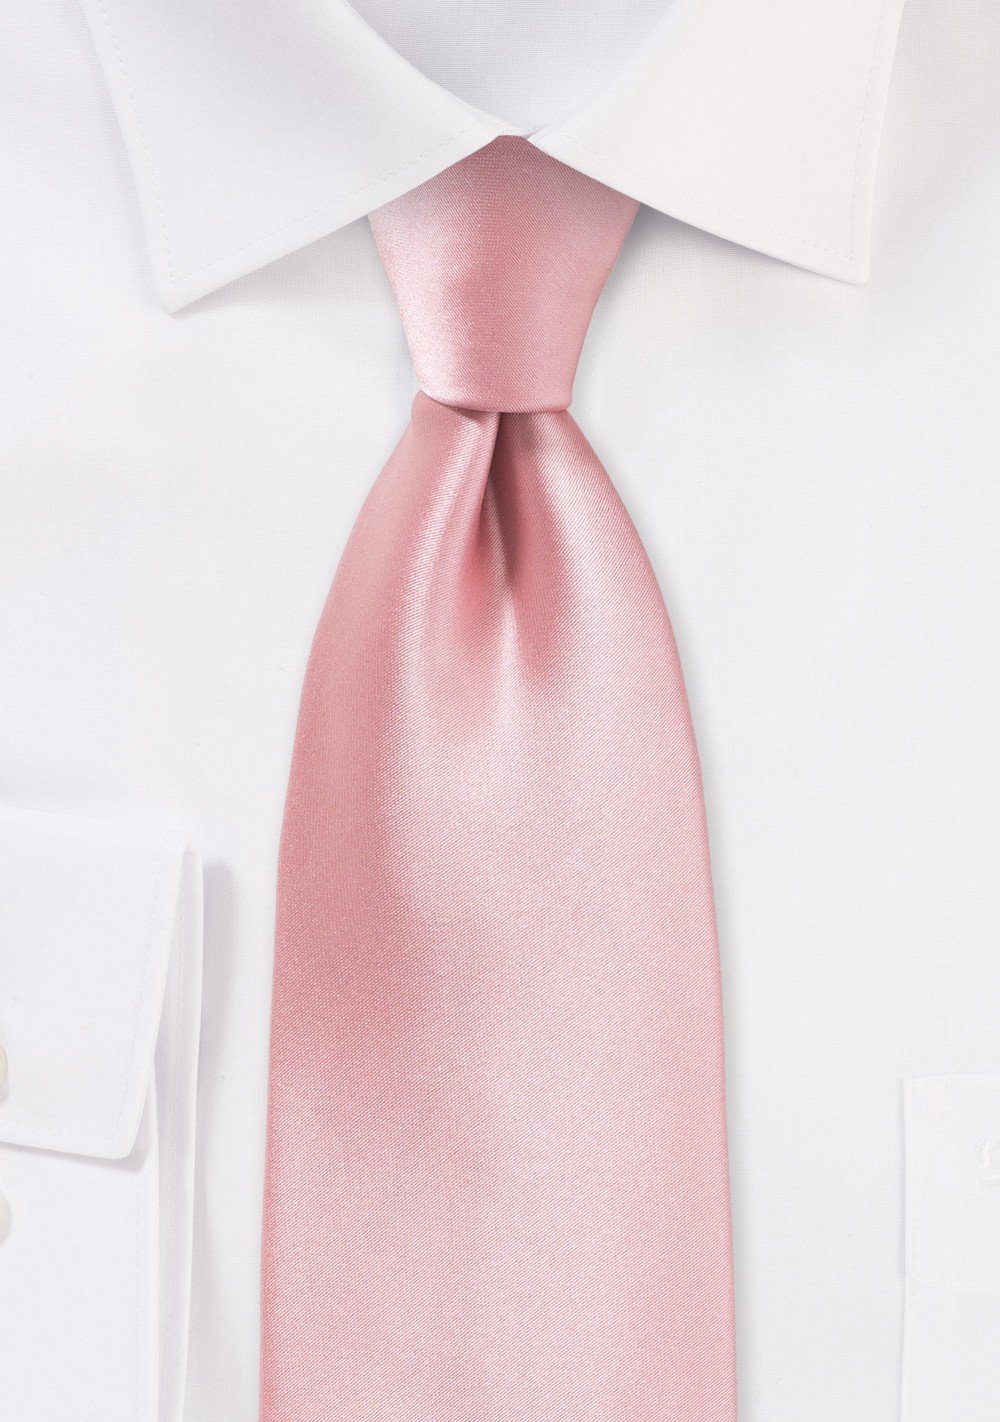 Petal Pink Hued Tie for Tall Men